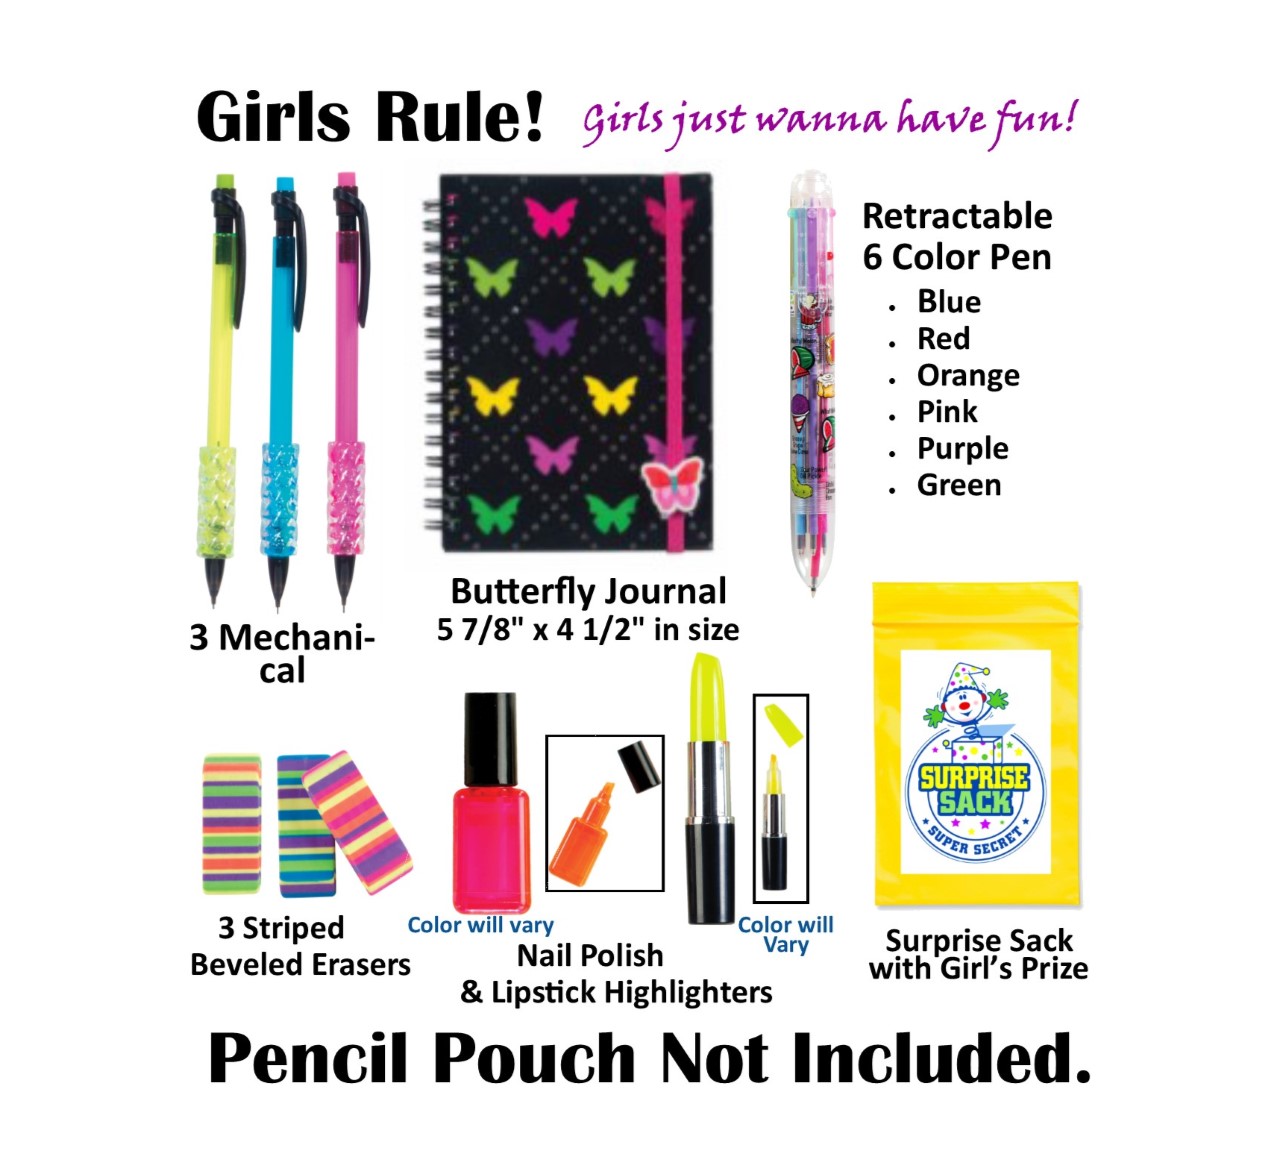 Girls Rule - Kids Themed Stationary Accessories-Pencils, Pens, Erasers & 1  Secret Surprise Sack (Pink Pouch) - Secret Surprise Sack